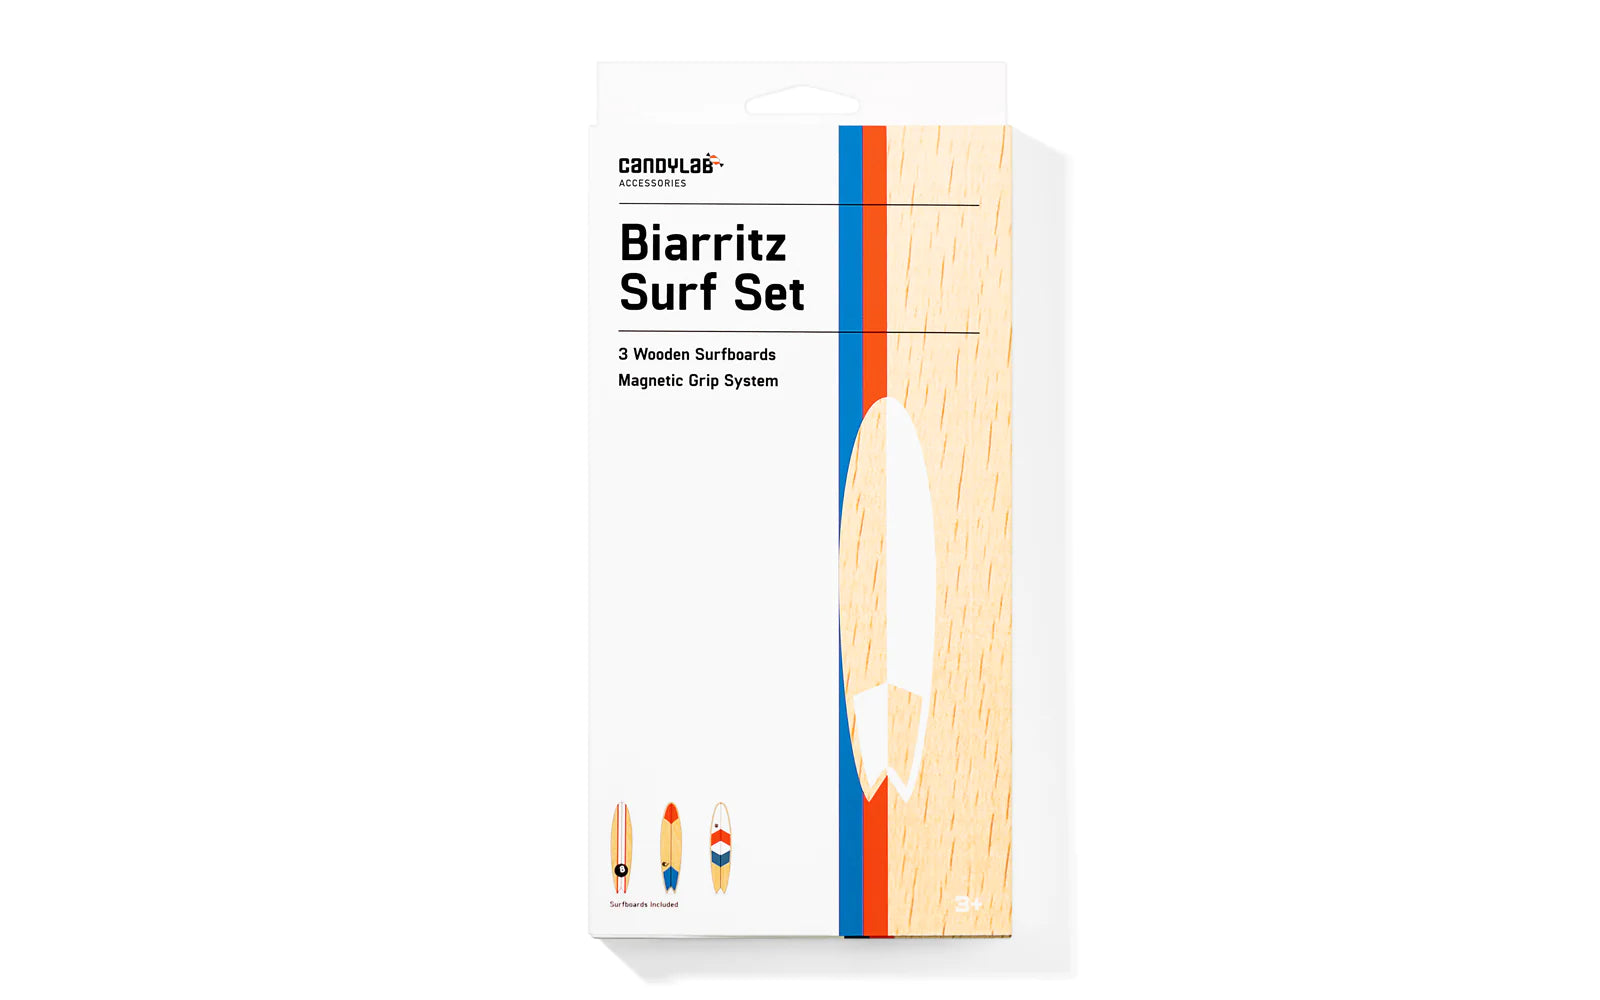 Biarritz Surf Set